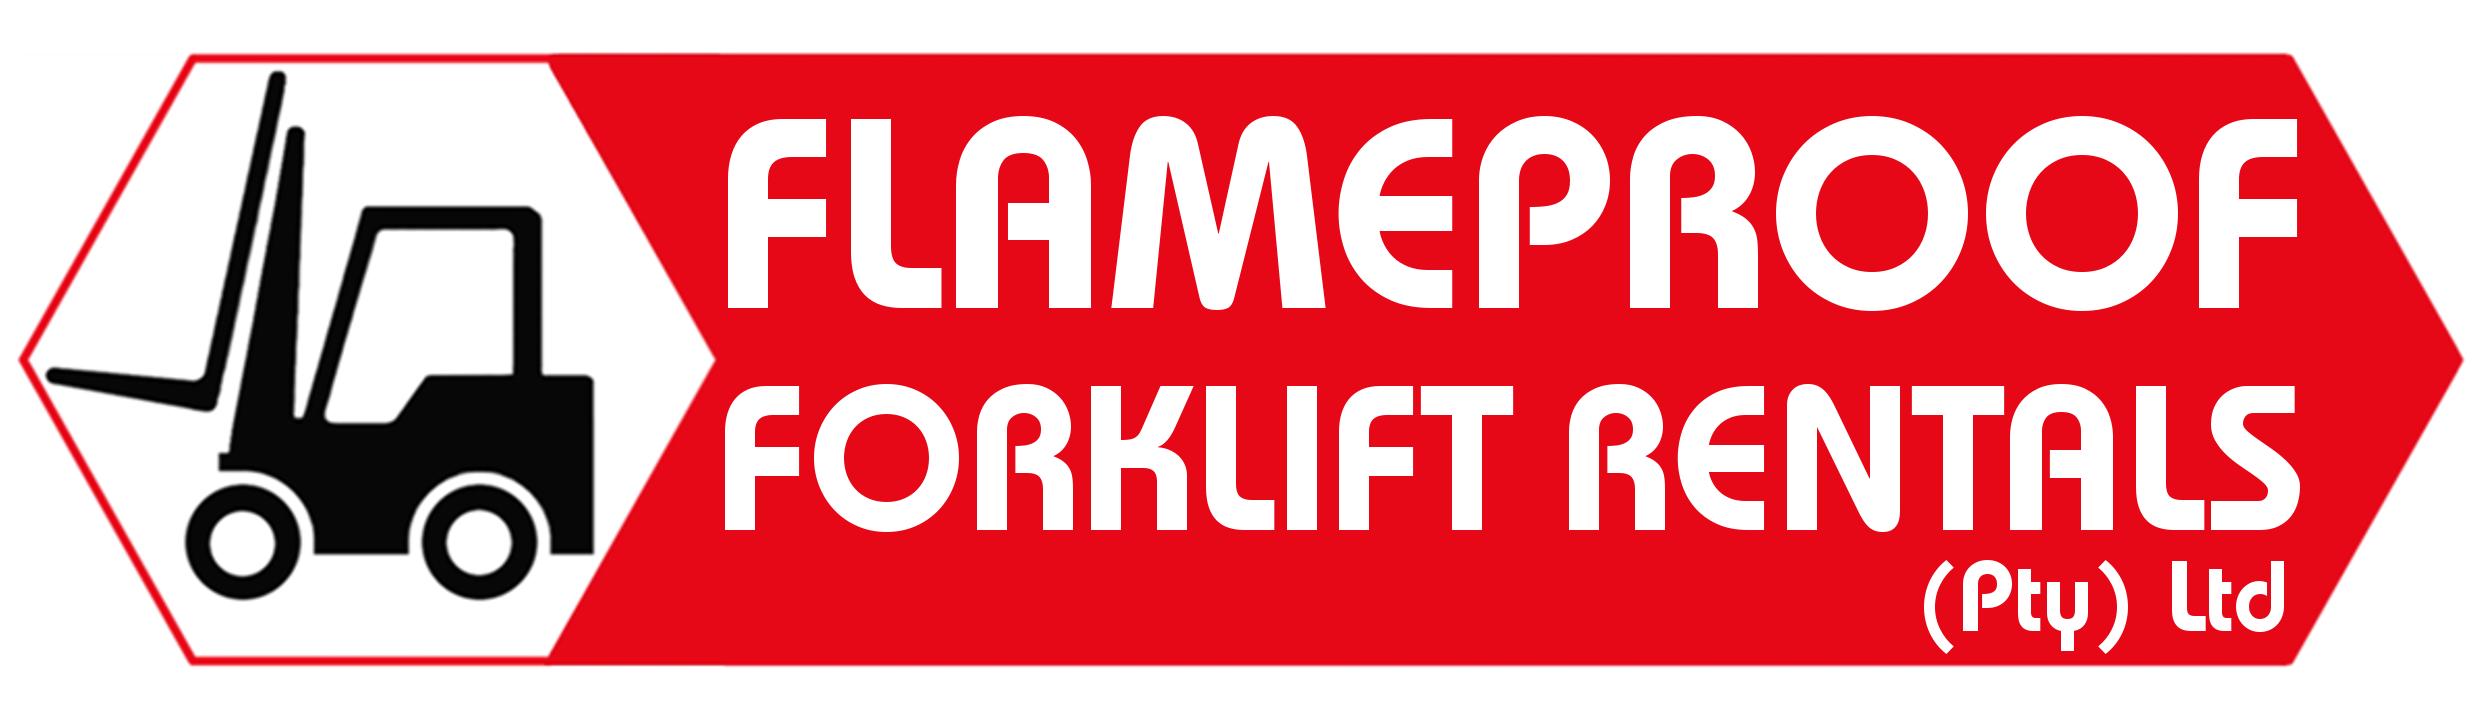 Flameproof Rental (pty) Ltd logo